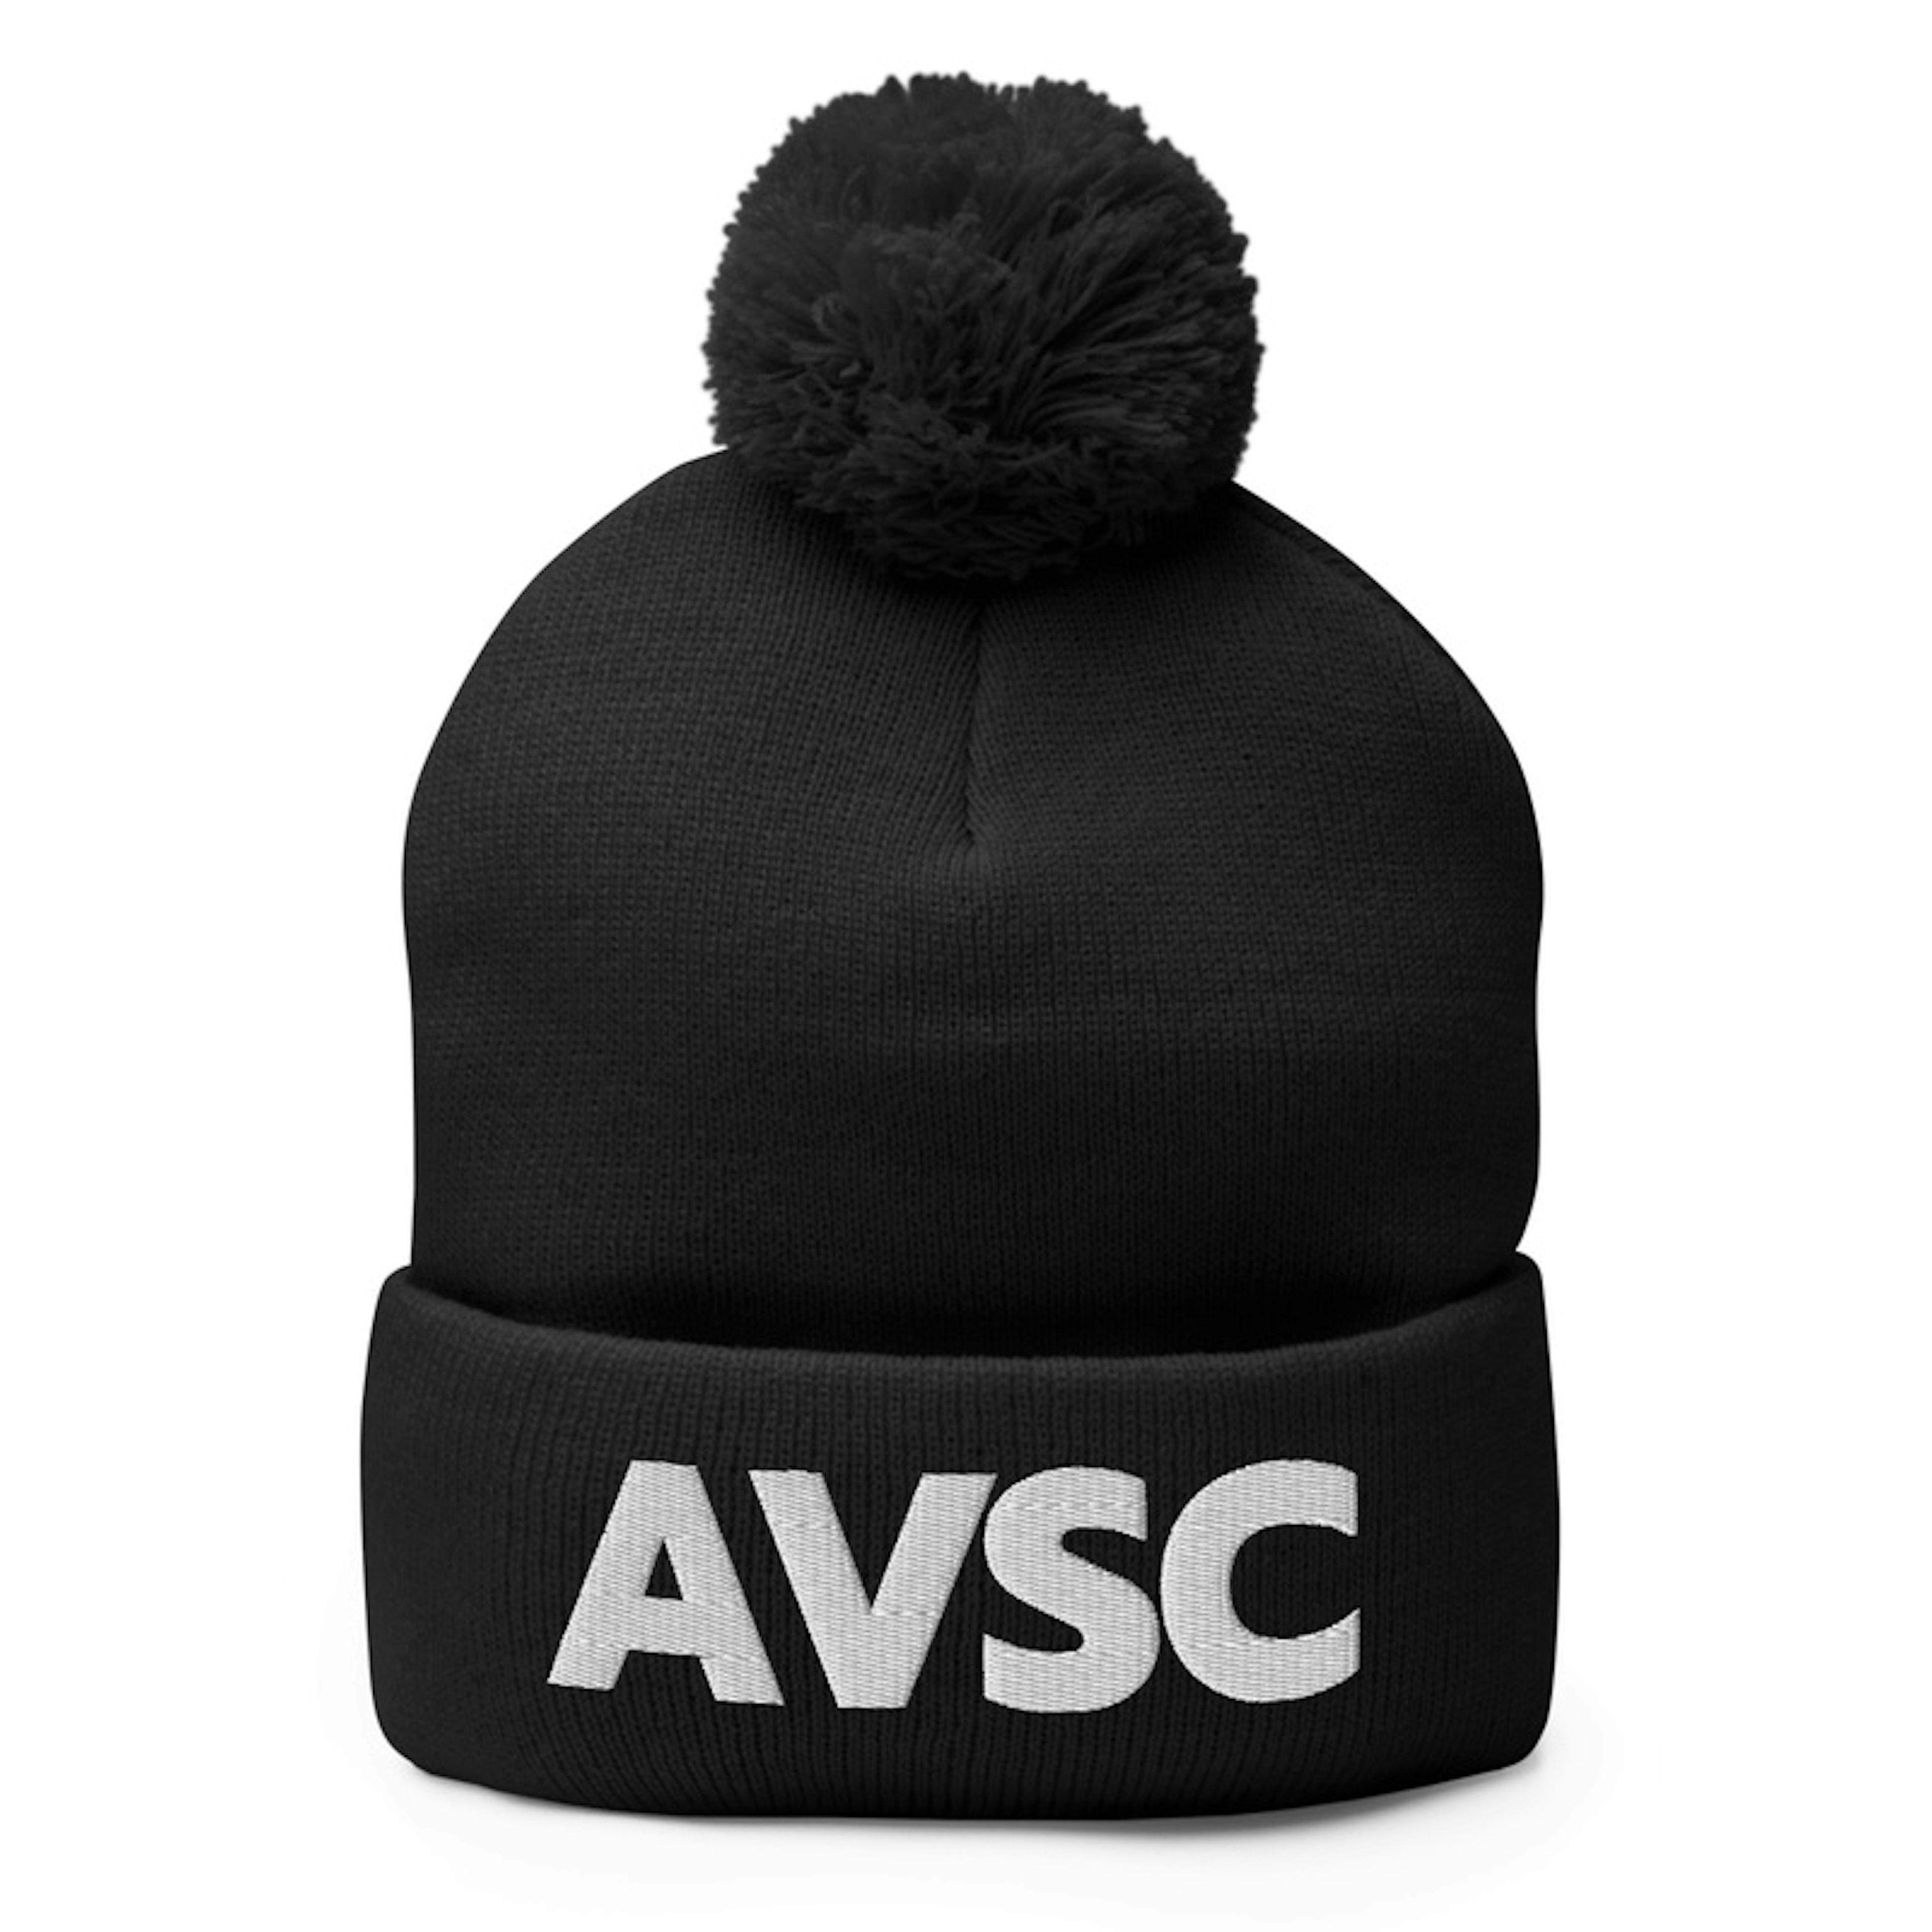 AVSC PomPom Hat